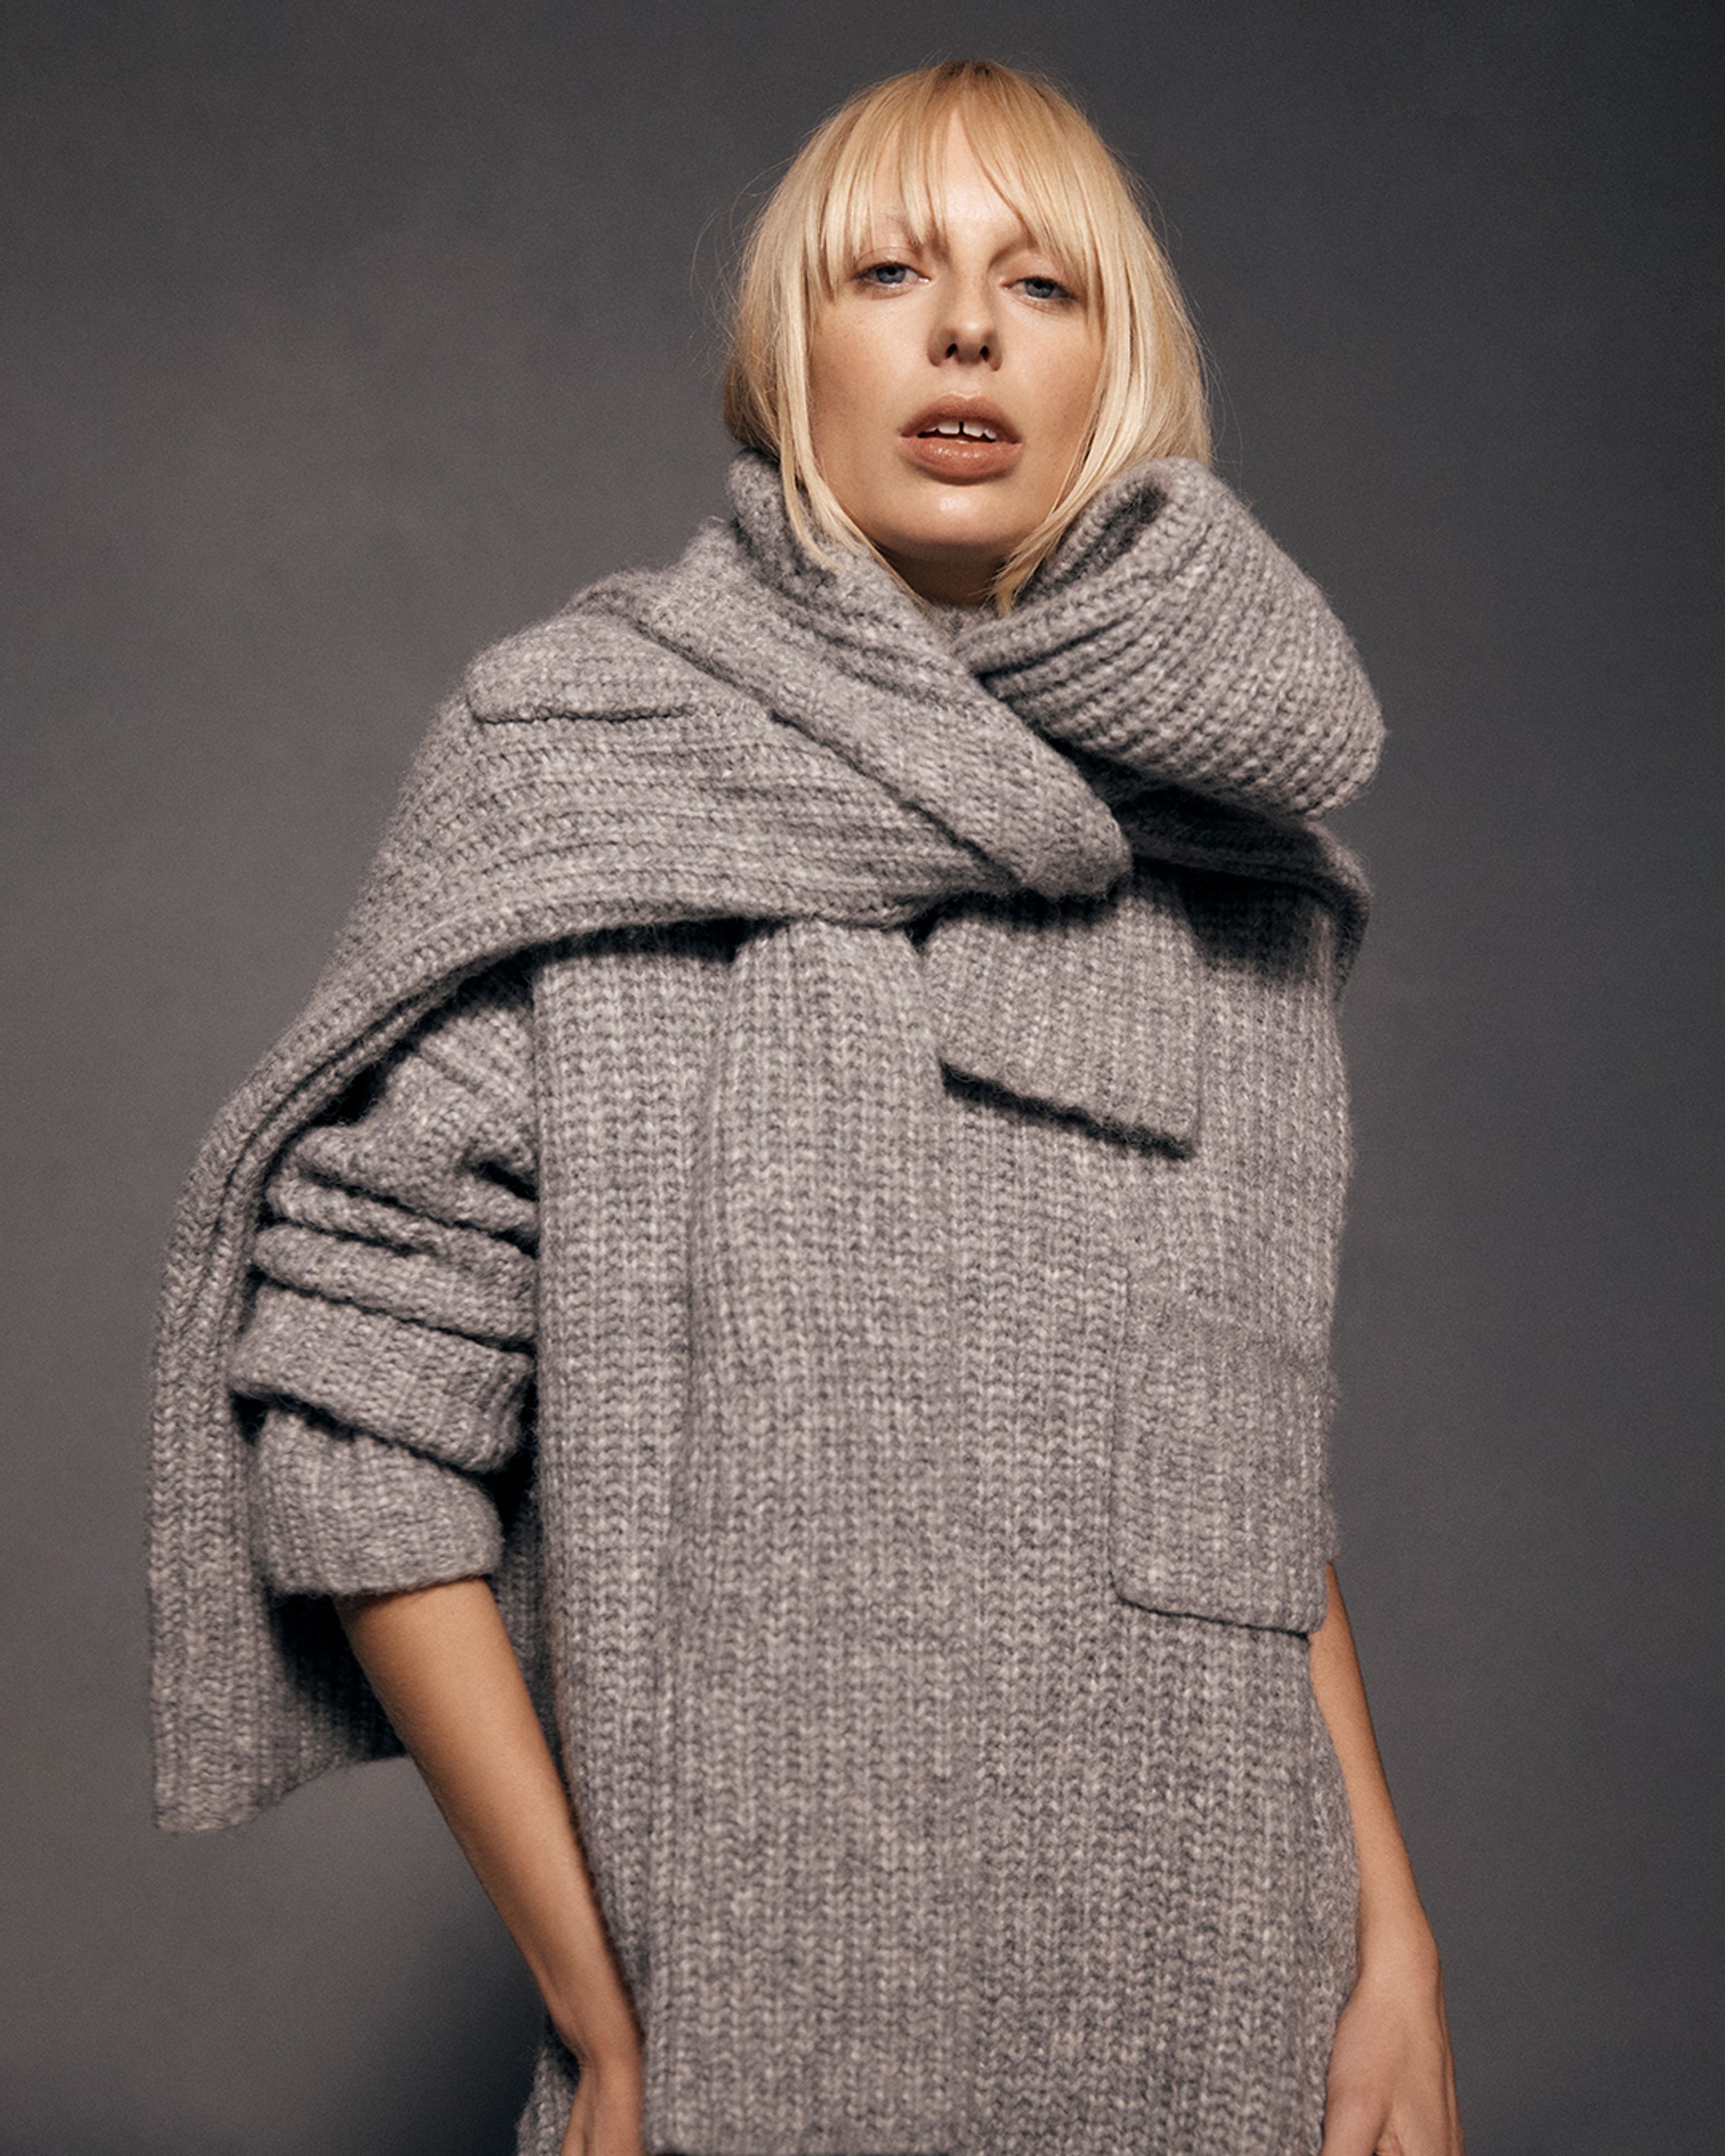 Blonde model wearing a grey melange knitted sweater